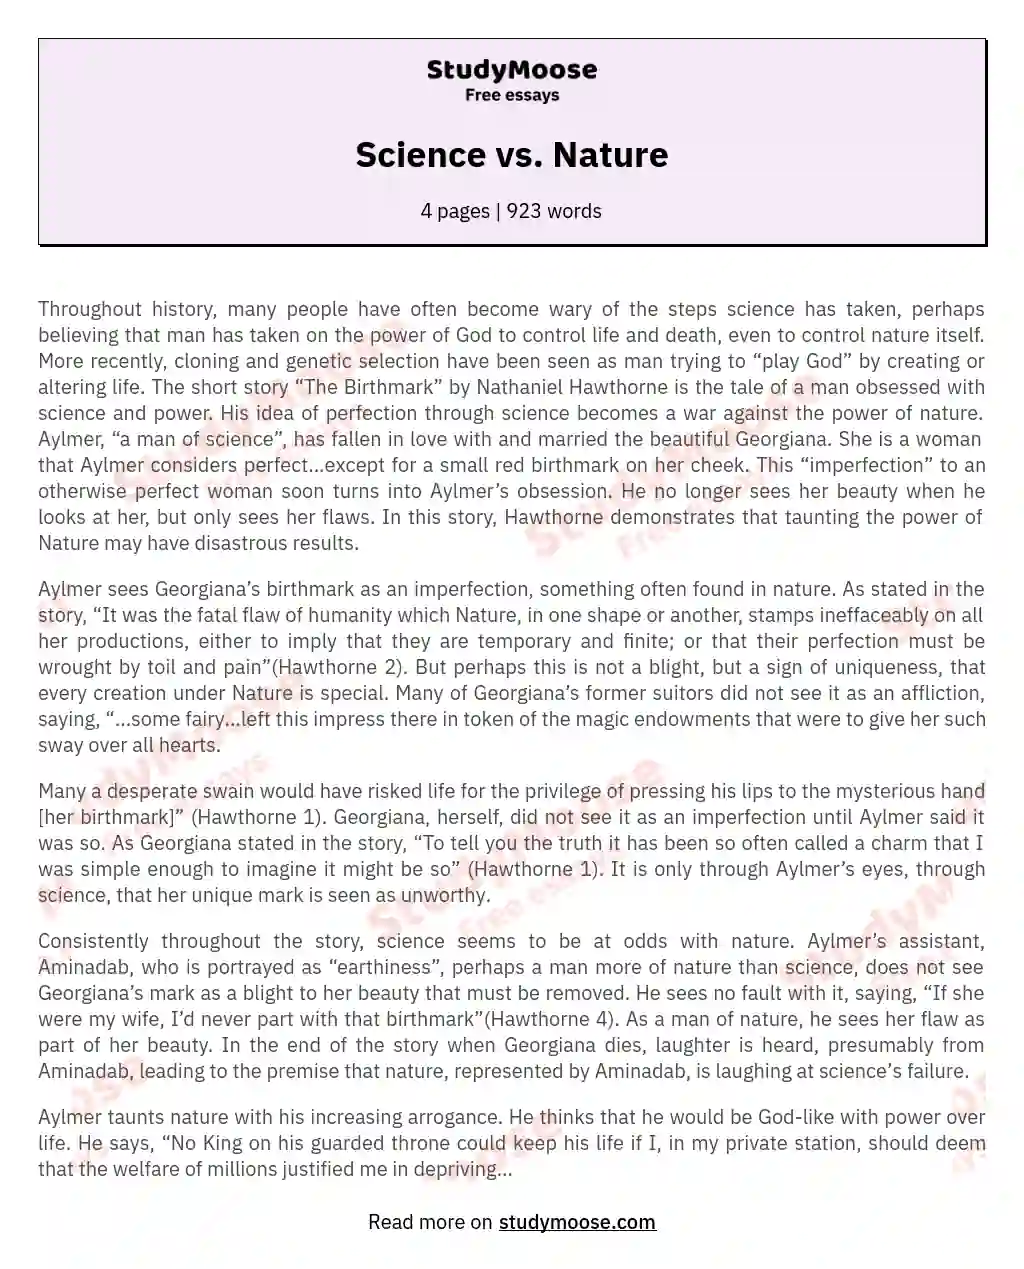 Science vs. Nature essay